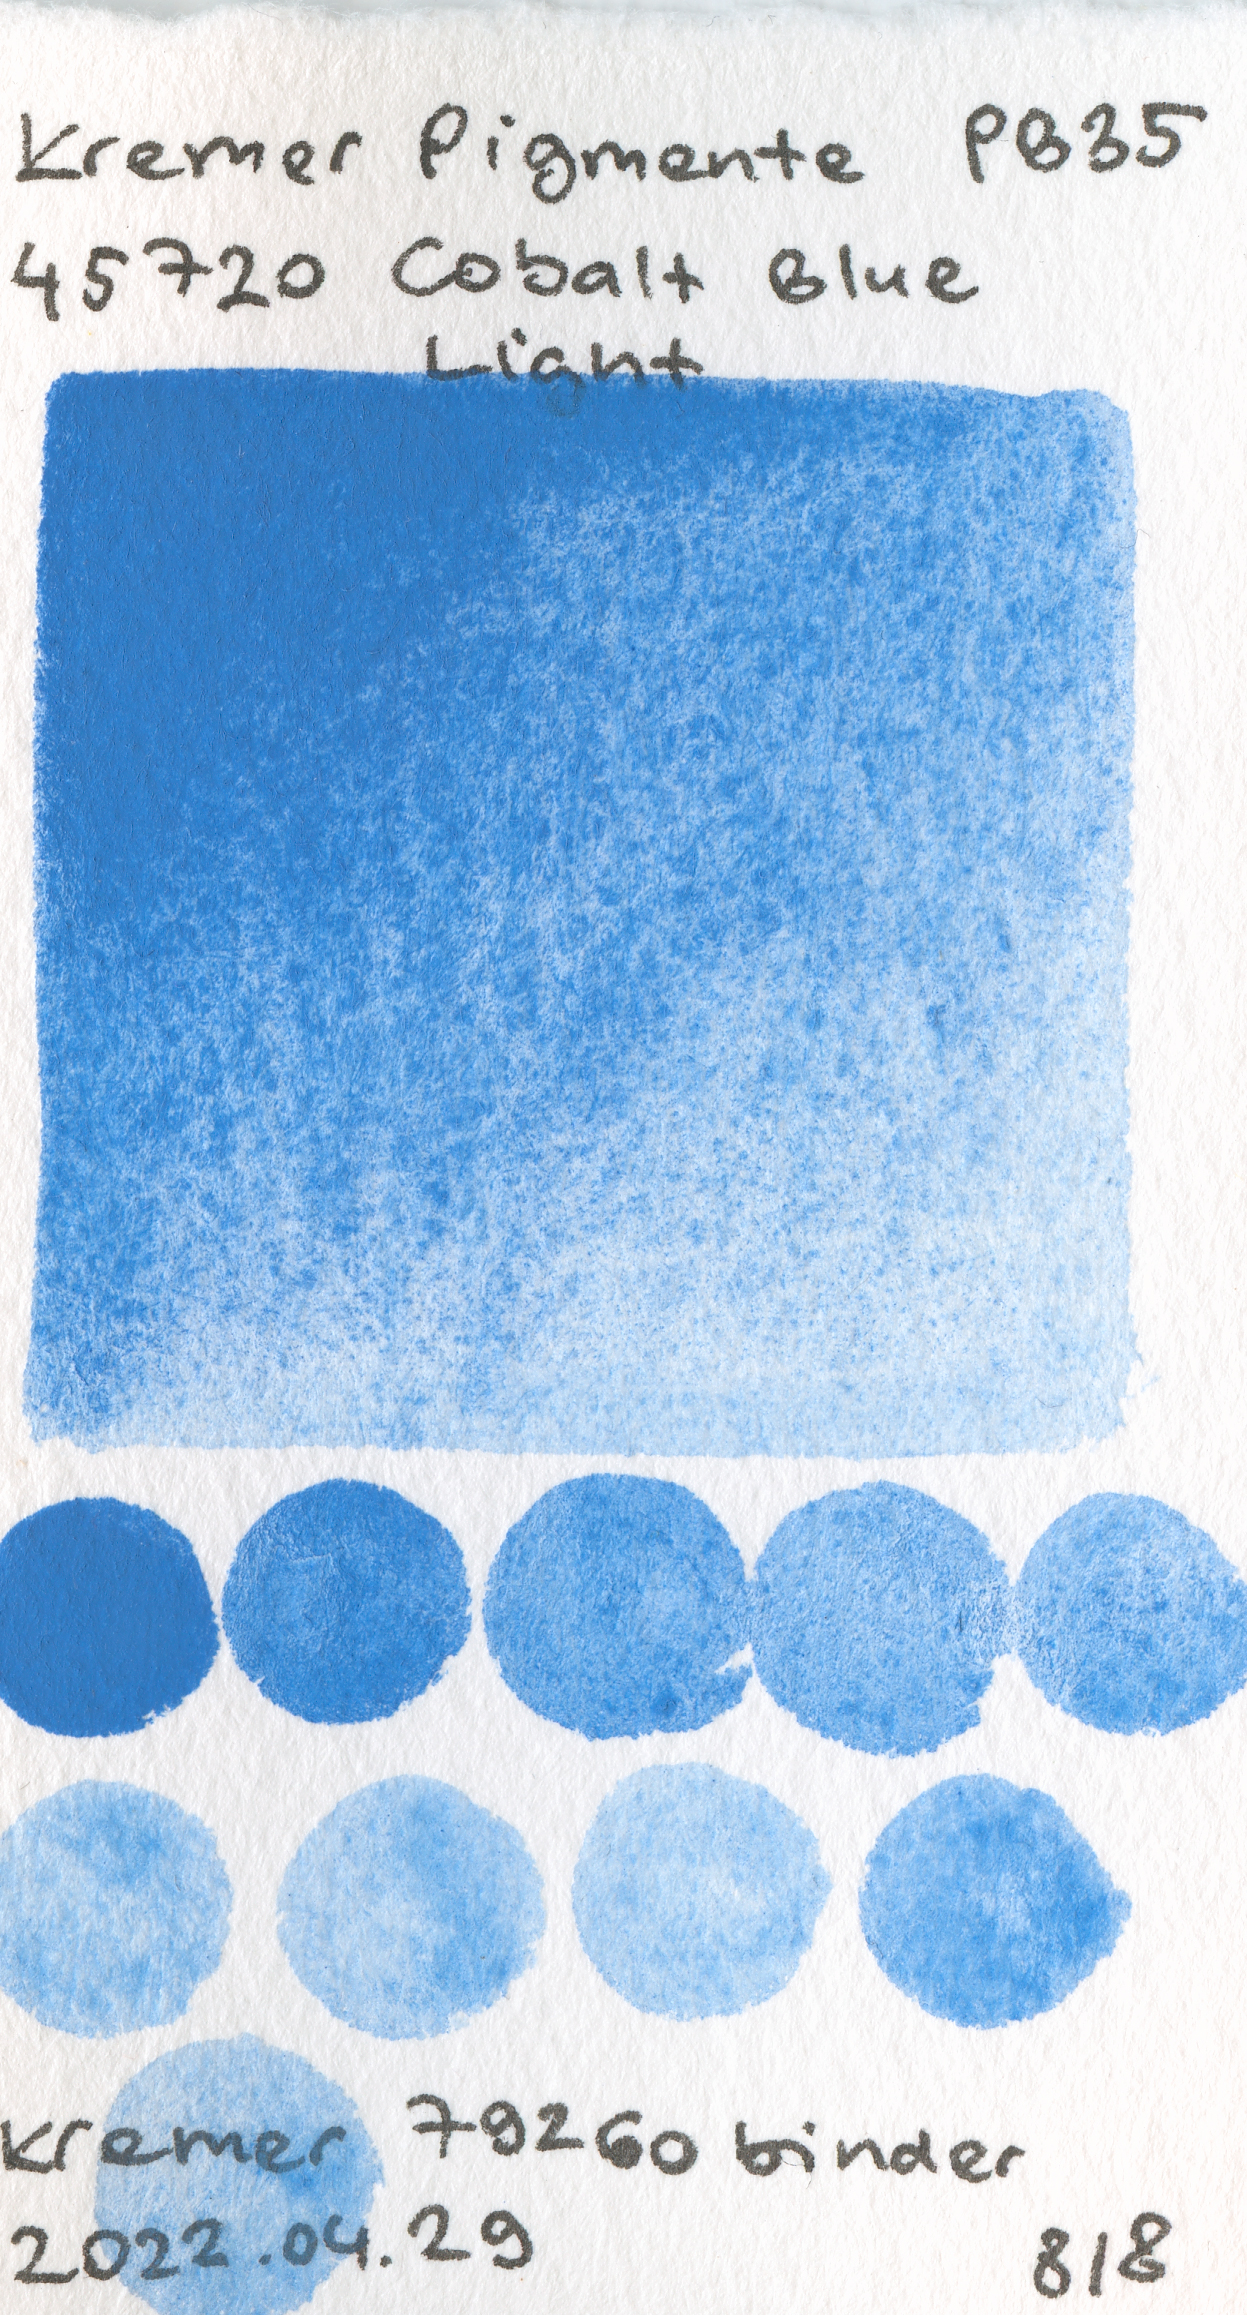 Kremer Pigmente [Dry] Pigments 45720 Cobalt Blue Light PB35 watercolor swatch